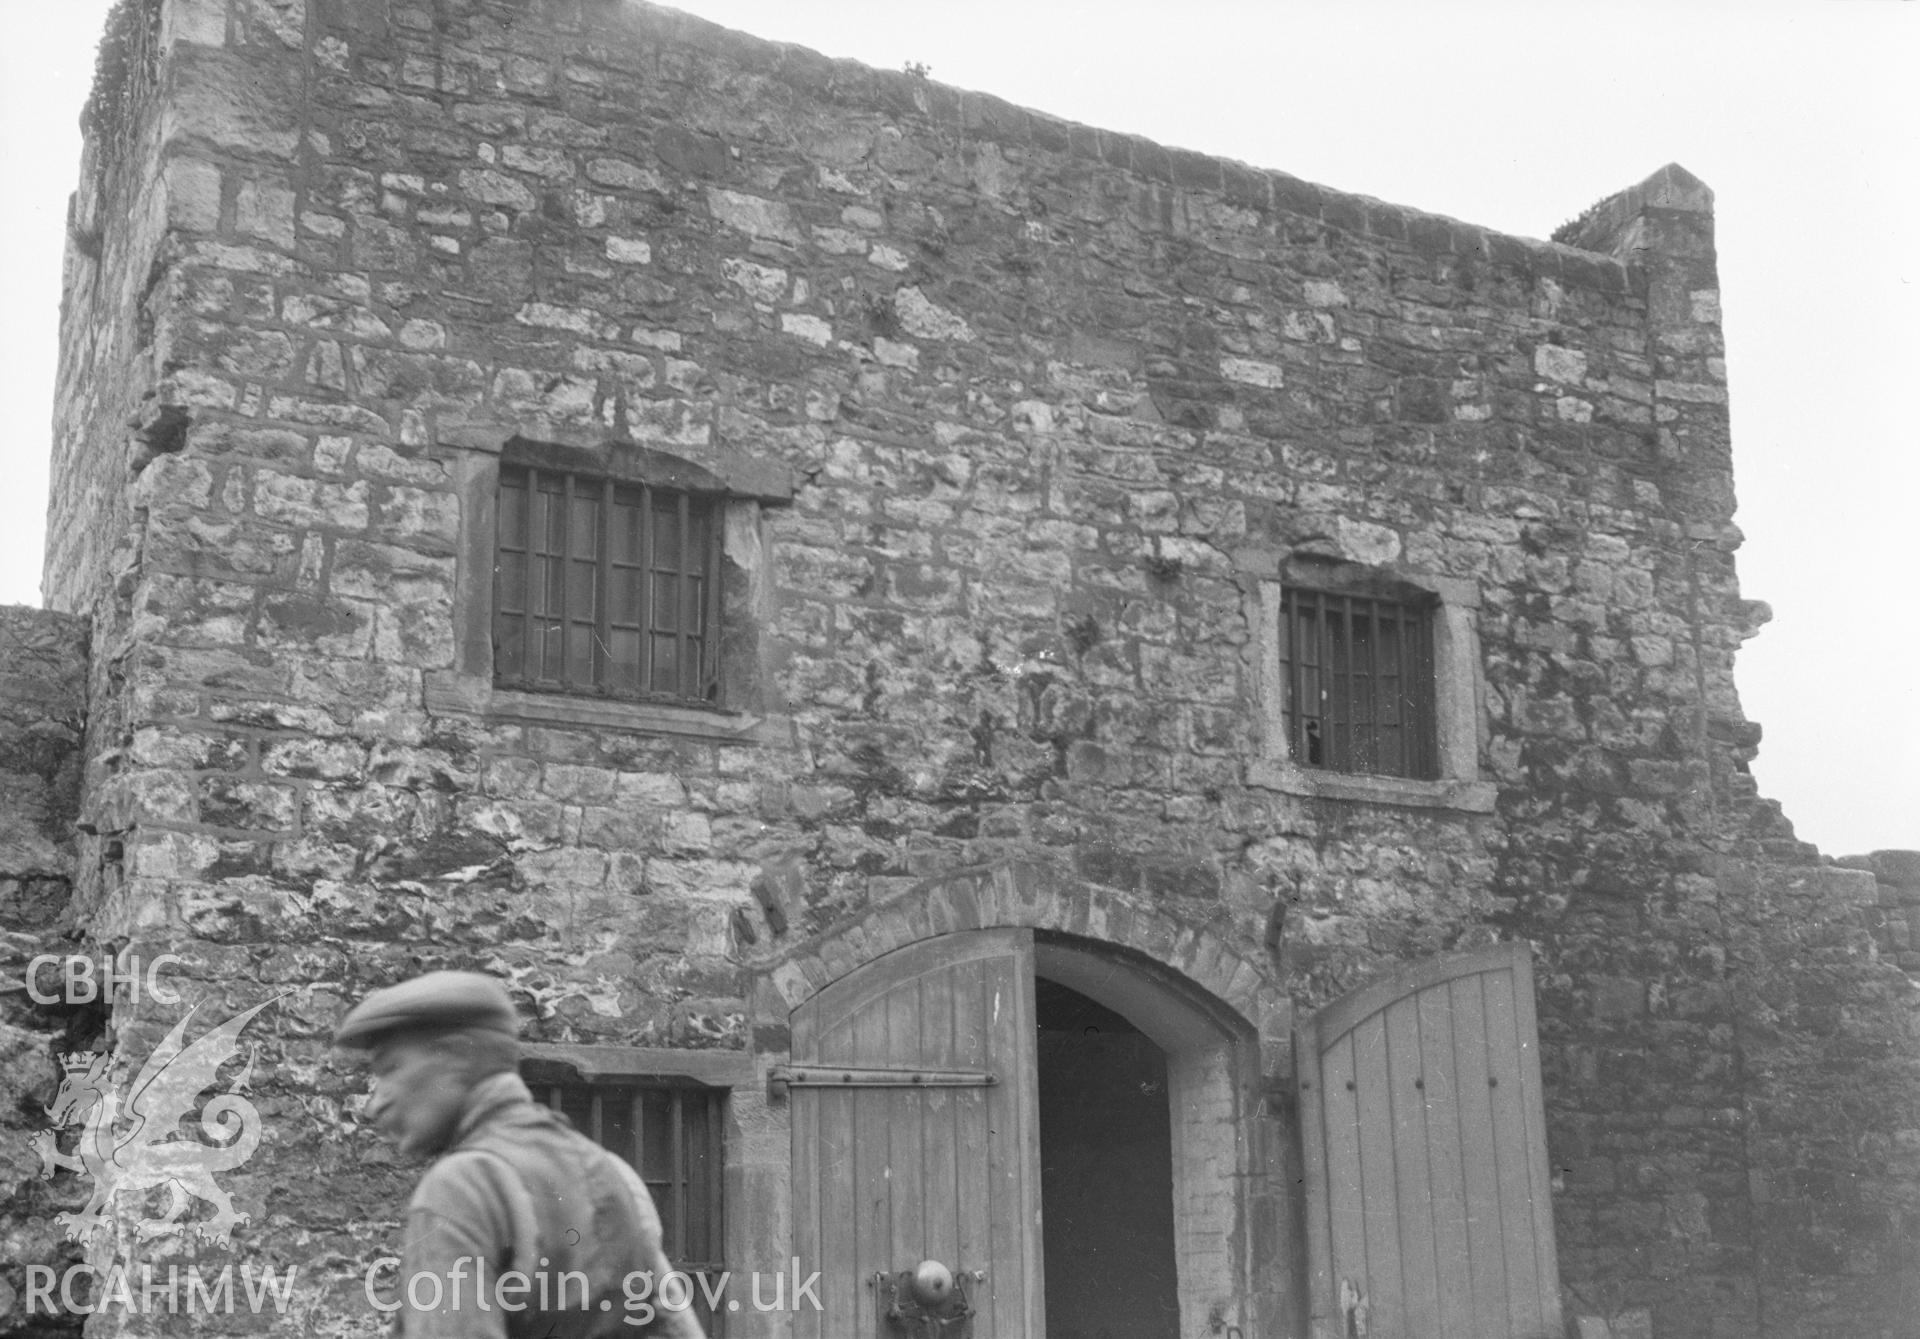 Digital copy of a 1930 nitrate negative showing Caernarfon Town Walls.